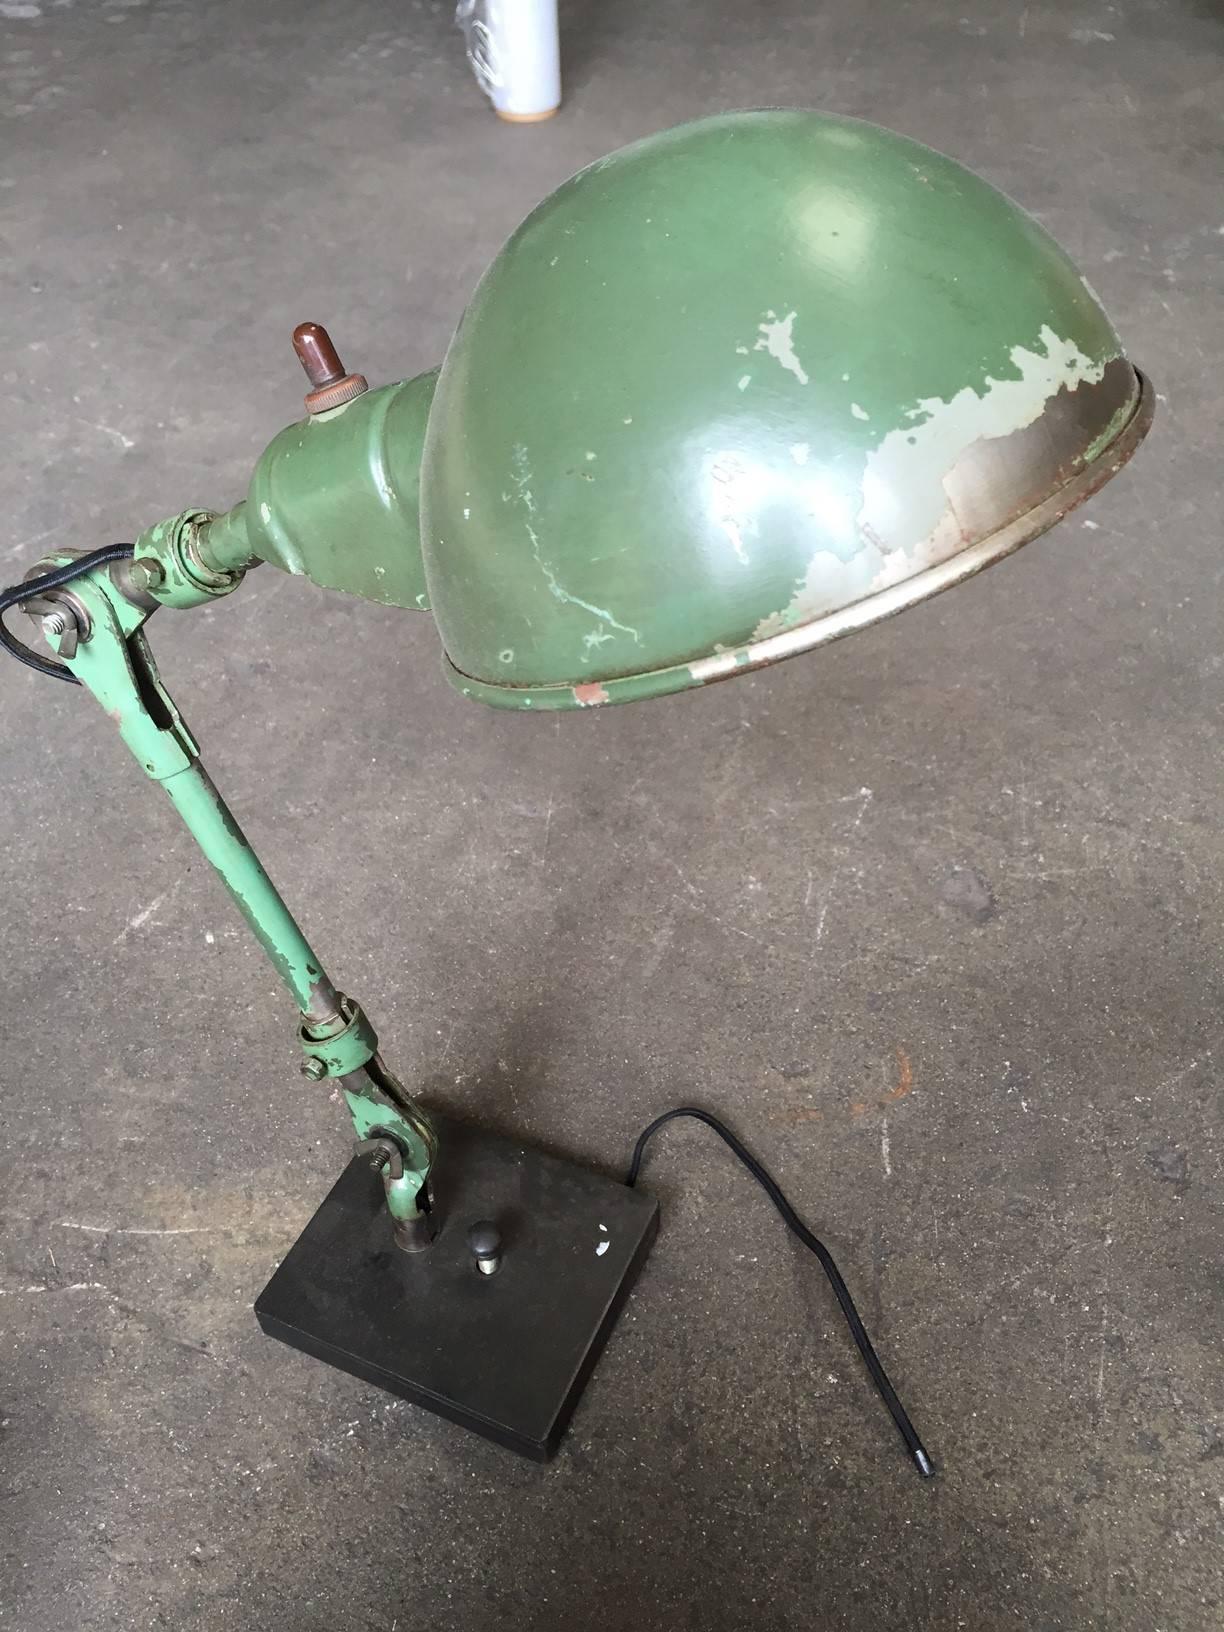 Industrial lamps - American, 1950s
Platform base - 5